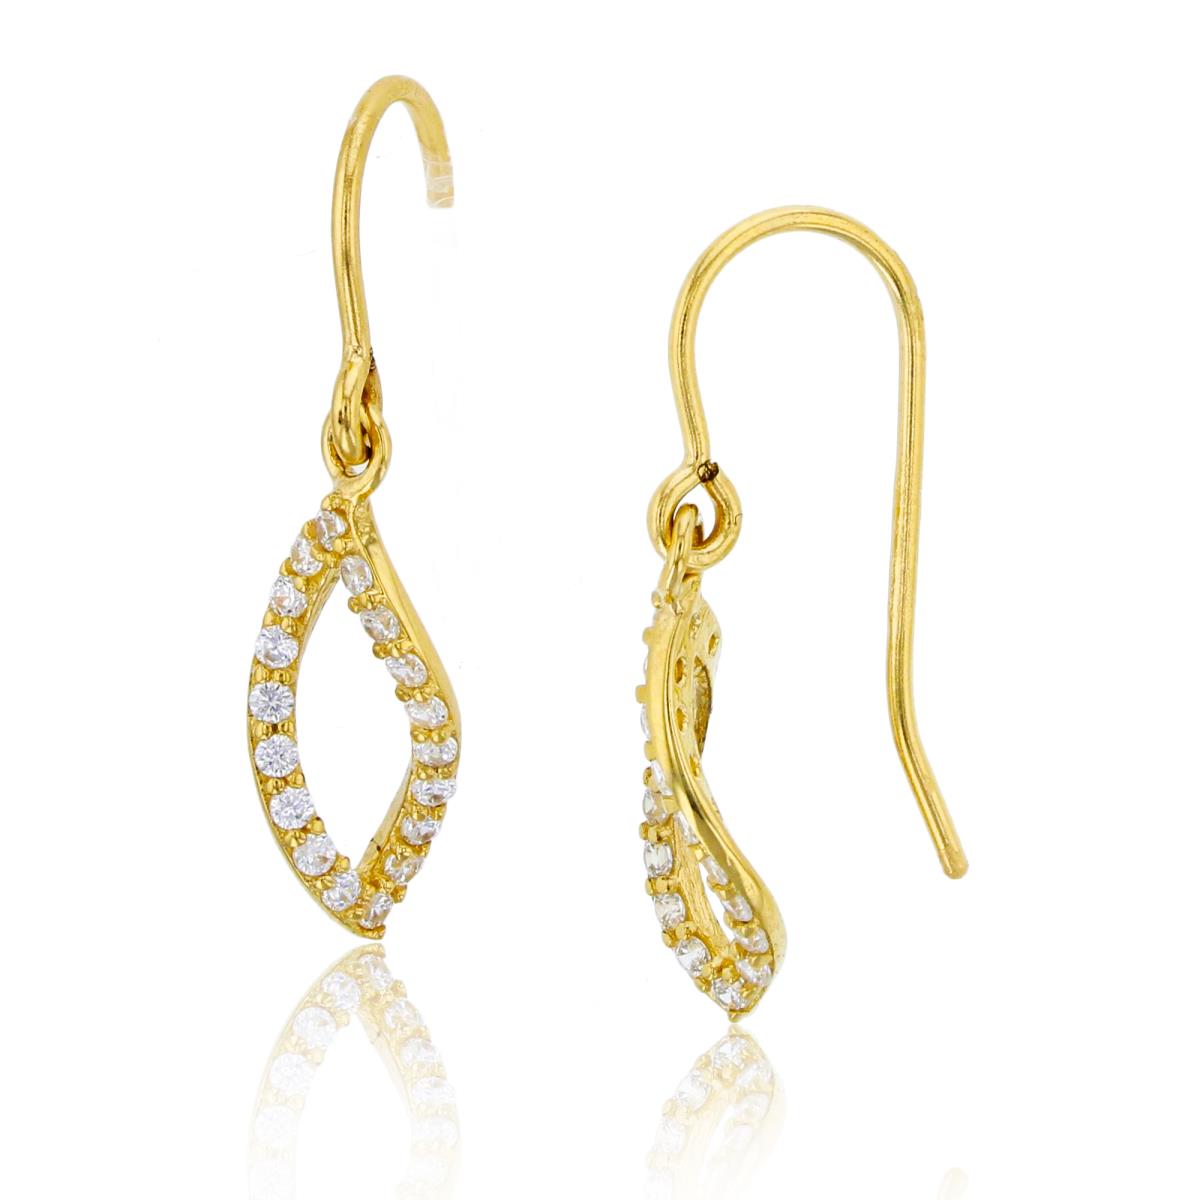 10K Yellow Gold 25x6mm Open Twist Marquise Shaped Dangling Fish-Hook Earring